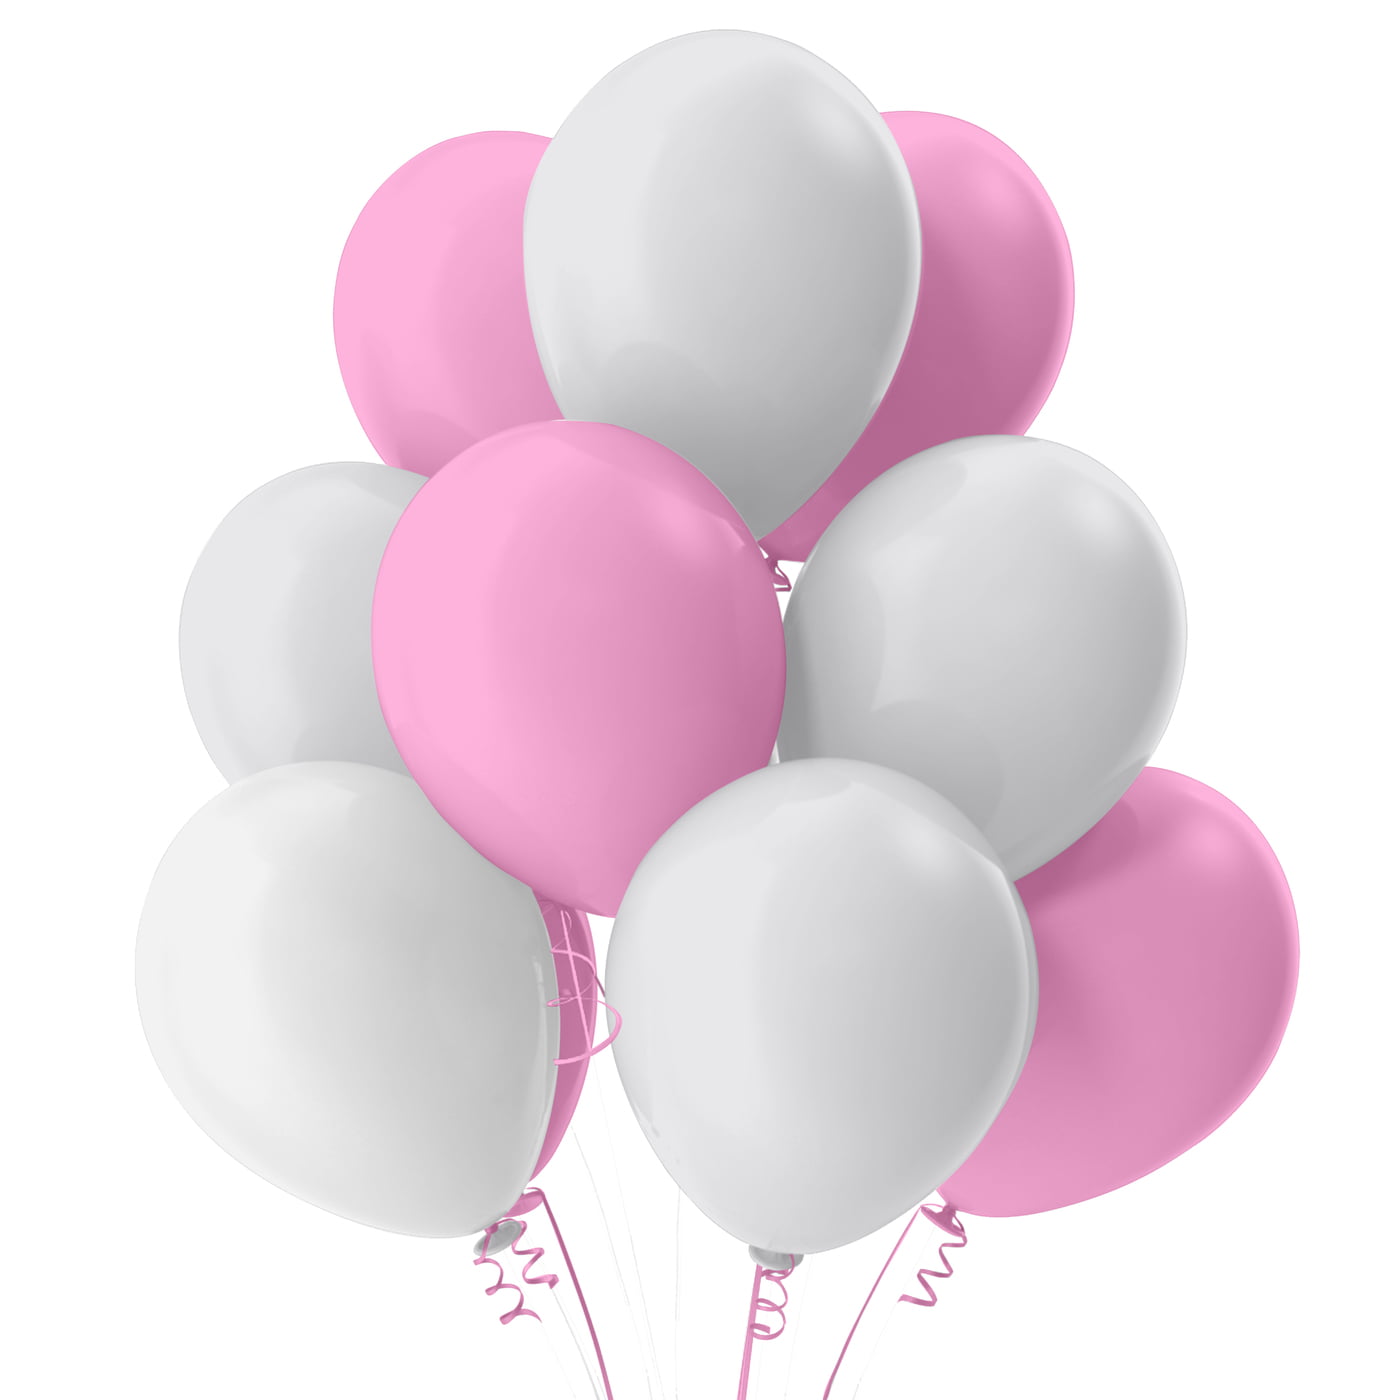 The Magic Balloons Store- Plain Pink and White Latex/Metallic Balloons- Balloons for Theme Party, Festivals, Birthday, Wedding, Photoshoot Decoration 50pcs – 181527